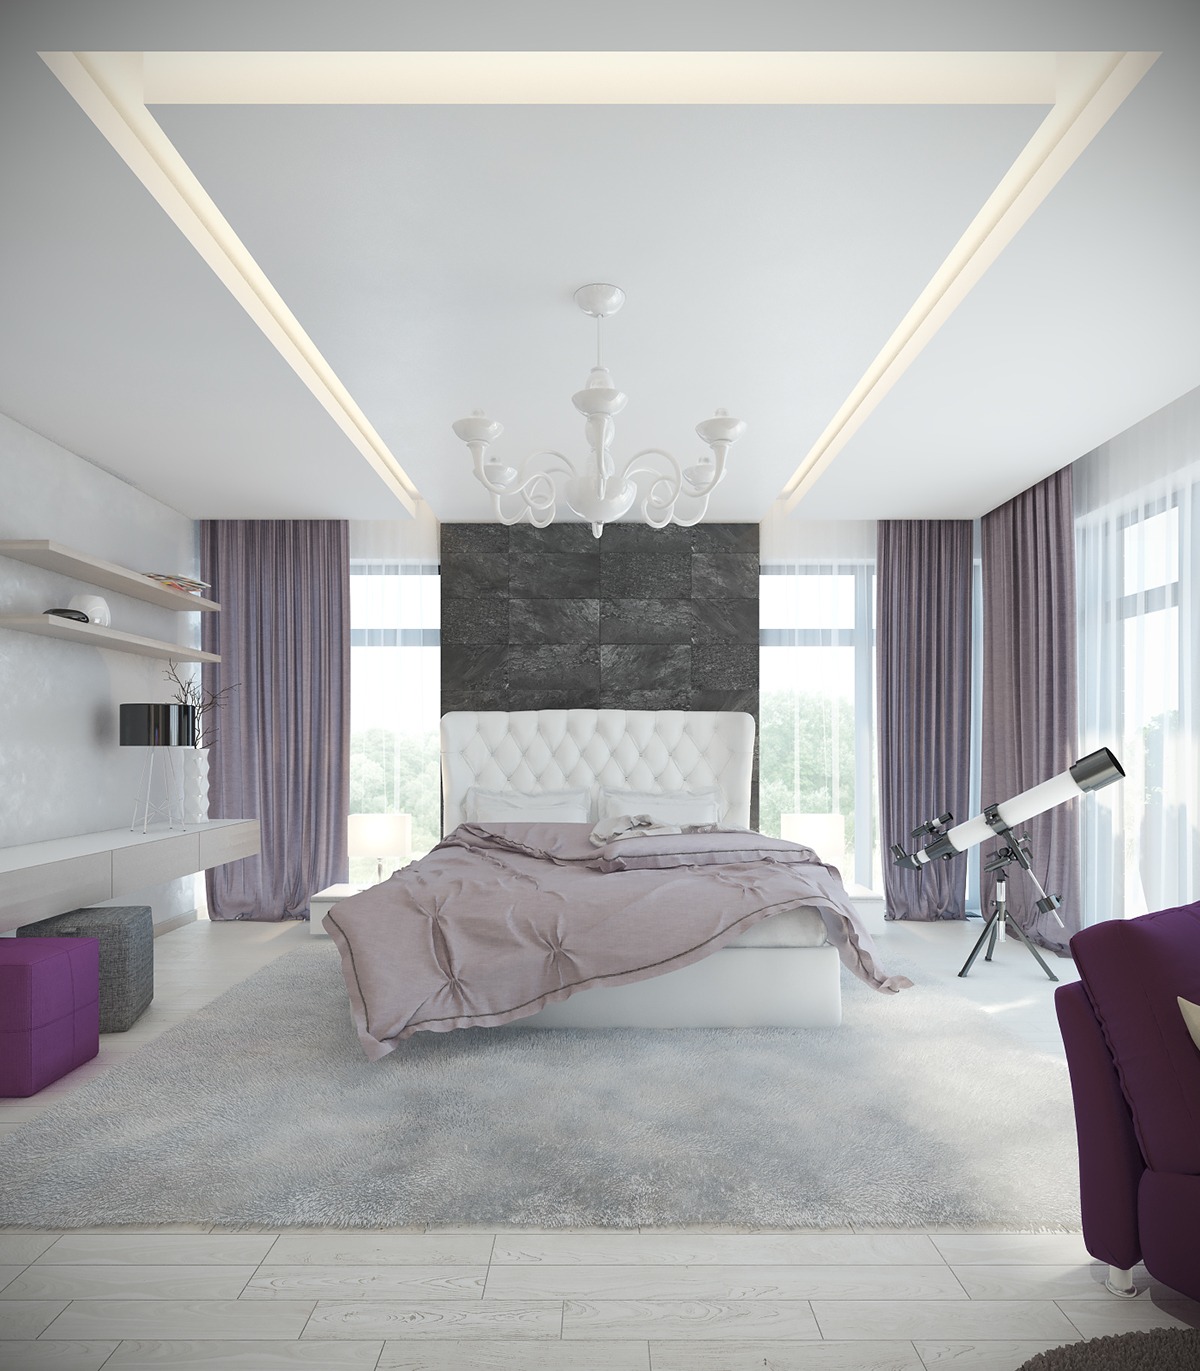 Modern bedroom design ideas with luxurious decoration "width =" 1200 "height =" 1371 "srcset =" https://mileray.com/wp-content/uploads/2020/05/1588510873_194_10-Modern-Bedroom-Design-Ideas-With-Luxury-Decorating-Ideas.jpg 1200w, https: // mileray.com/wp-content/uploads/2016/06/Aleksandr-Svyryd-263x300.jpg 263w, https://mileray.com/wp-content/uploads/2016/06/Aleksandr-Svyryd-768x877.jpg 768w, https://mileray.com/wp-content/uploads/2016/06/Aleksandr-Svyryd-896x1024.jpg 896w, https://mileray.com/wp-content/uploads/2016/06/Aleksandr-Svyryd -696x795 .jpg 696w, https://mileray.com/wp-content/uploads/2016/06/Aleksandr-Svyryd-1068x1220.jpg 1068w, https://mileray.com/wp-content/uploads/2016/06 / Aleksandr -Svyryd-368x420.jpg 368w "sizes =" (maximum width: 1200px) 100vw, 1200px